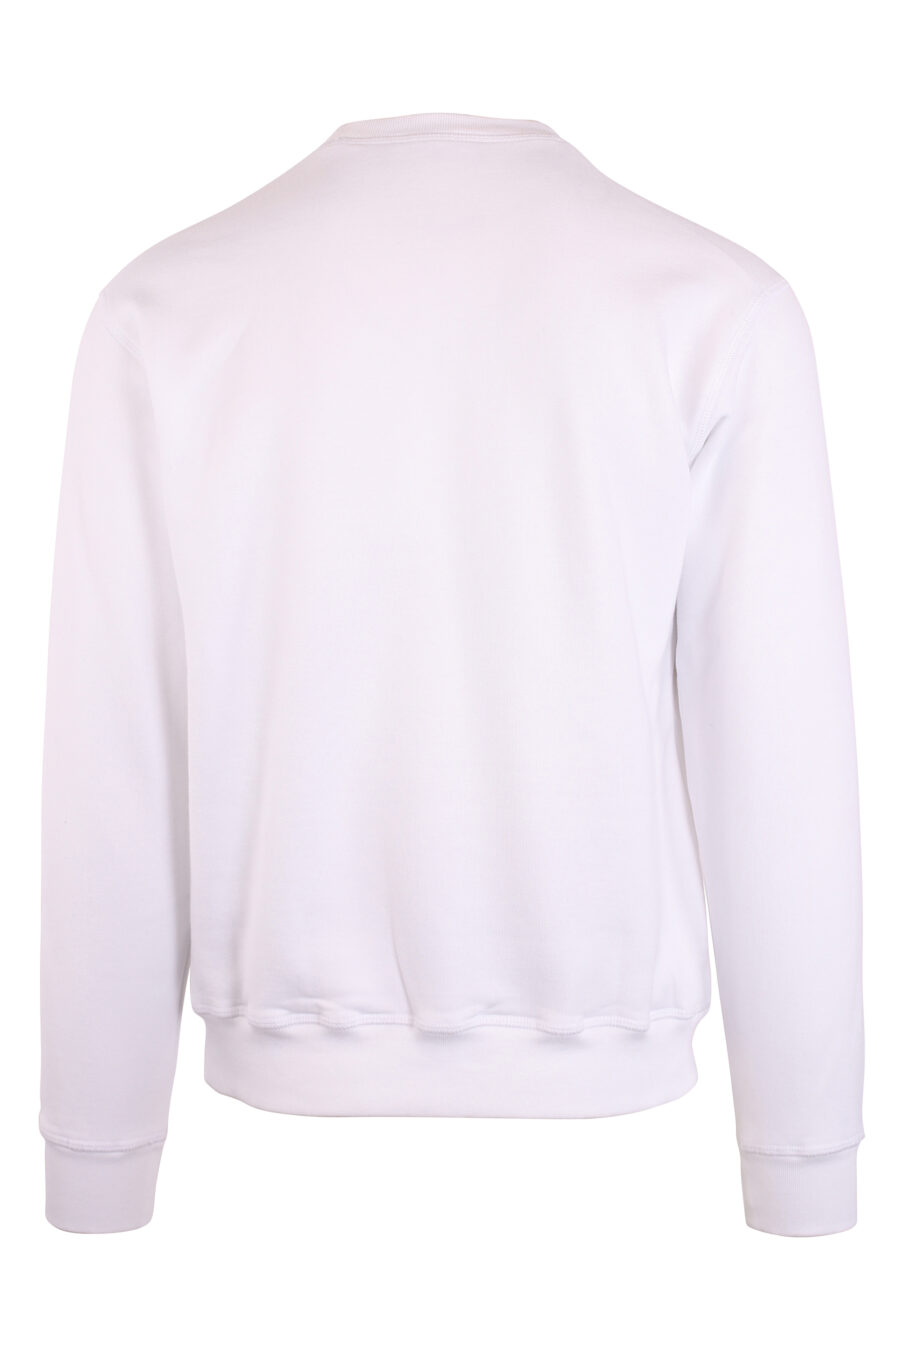 White sweatshirt with sunset palm print - IMG 8901